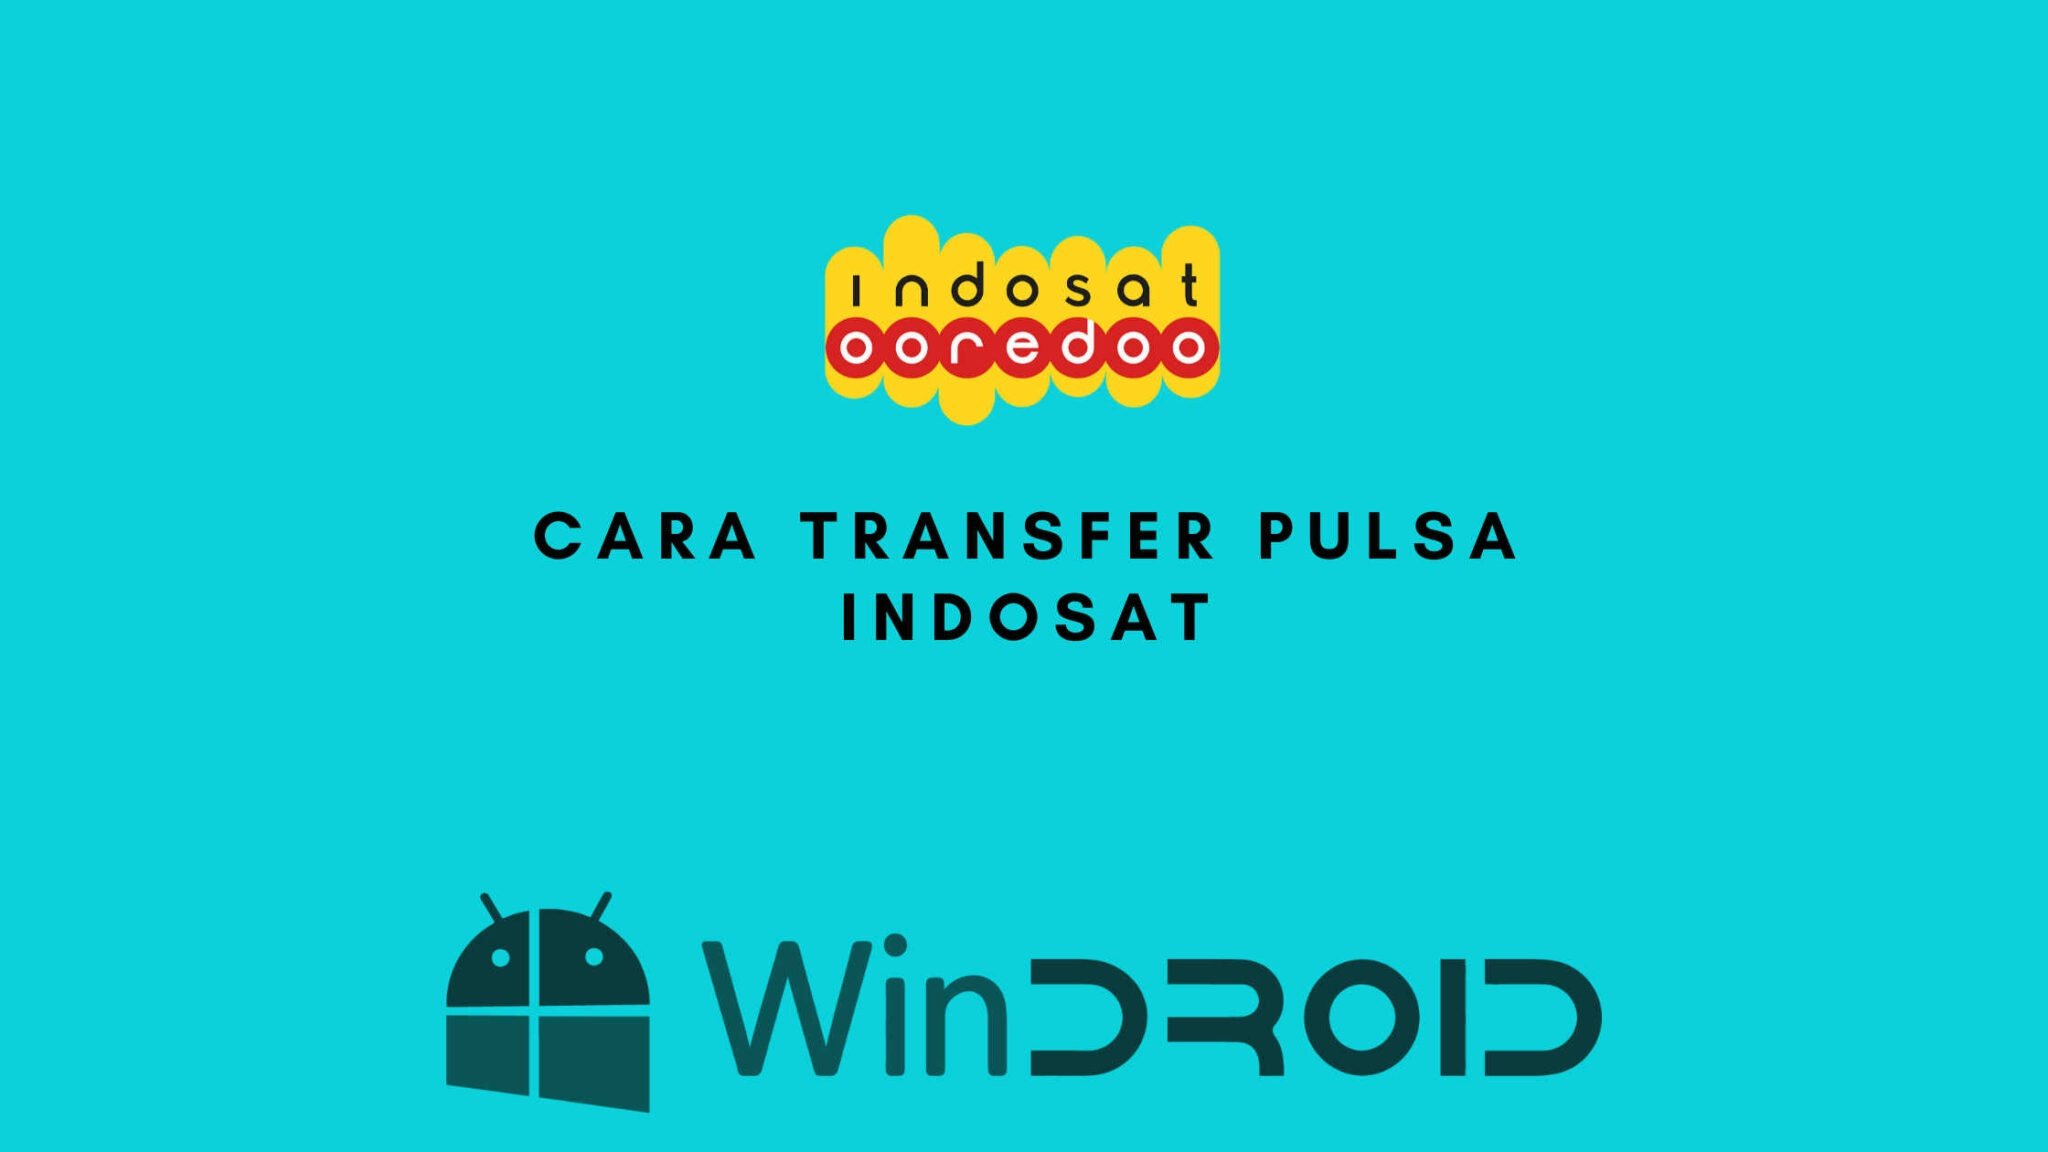 2 Cara Transfer Pulsa Indosat (Terbaru Mei 2021)